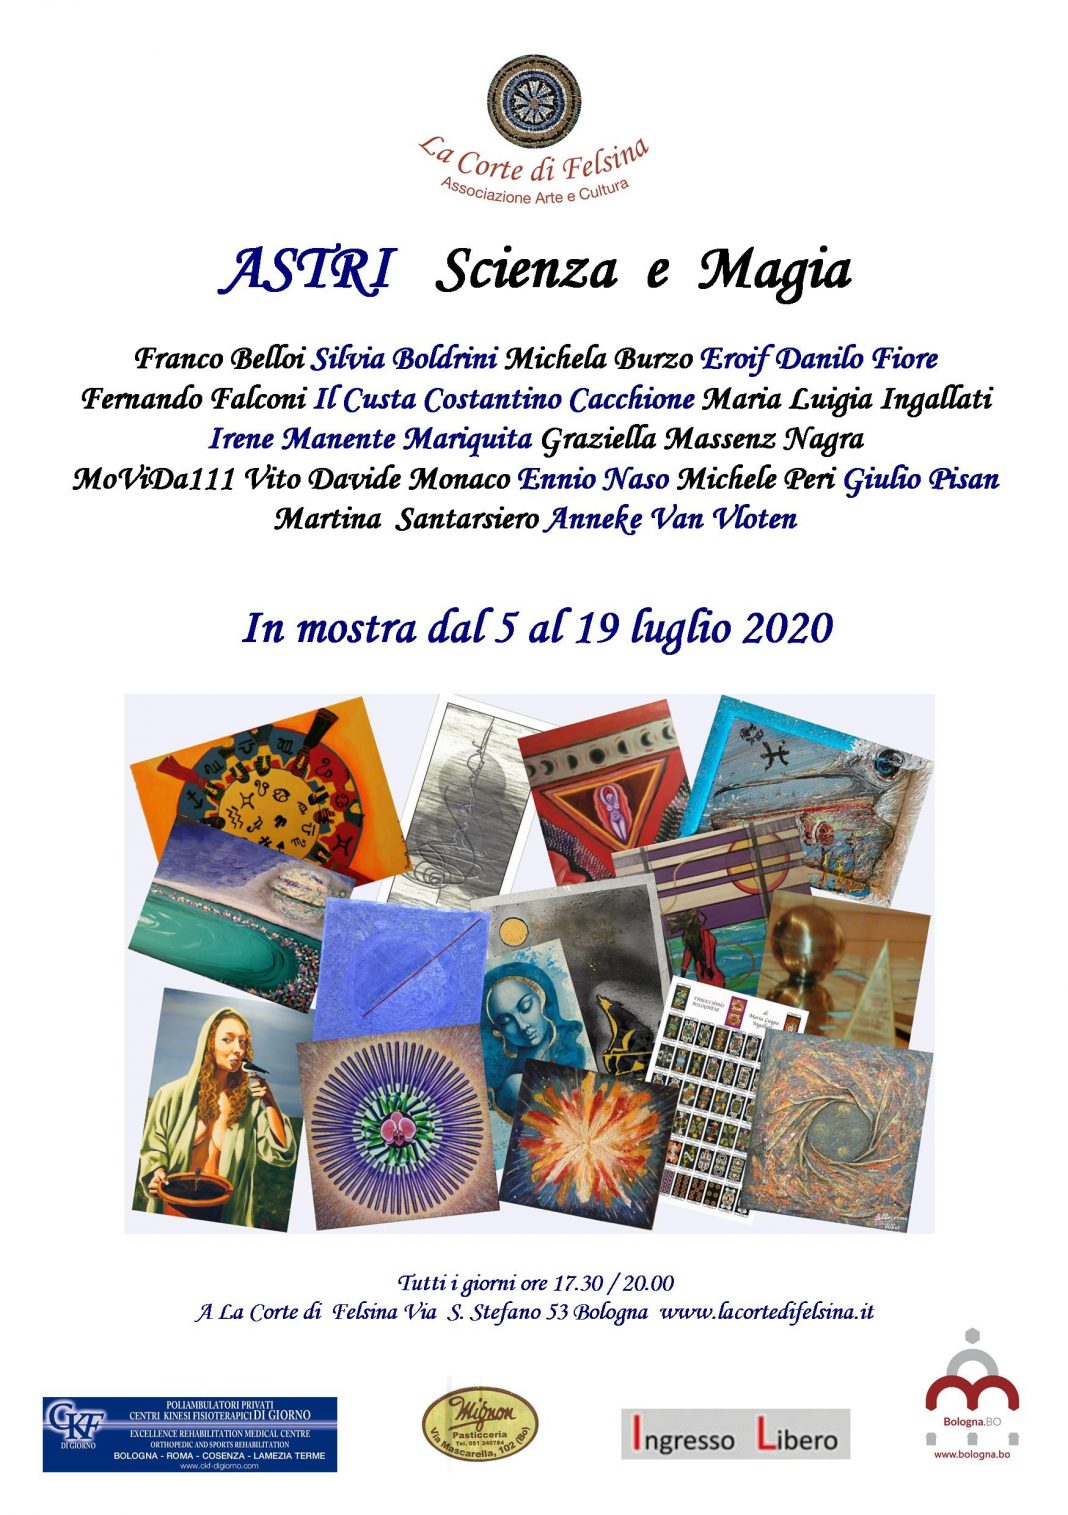 Astri. Scienza e Magiahttps://www.exibart.com/repository/media/formidable/11/A3-3-1068x1515.jpg